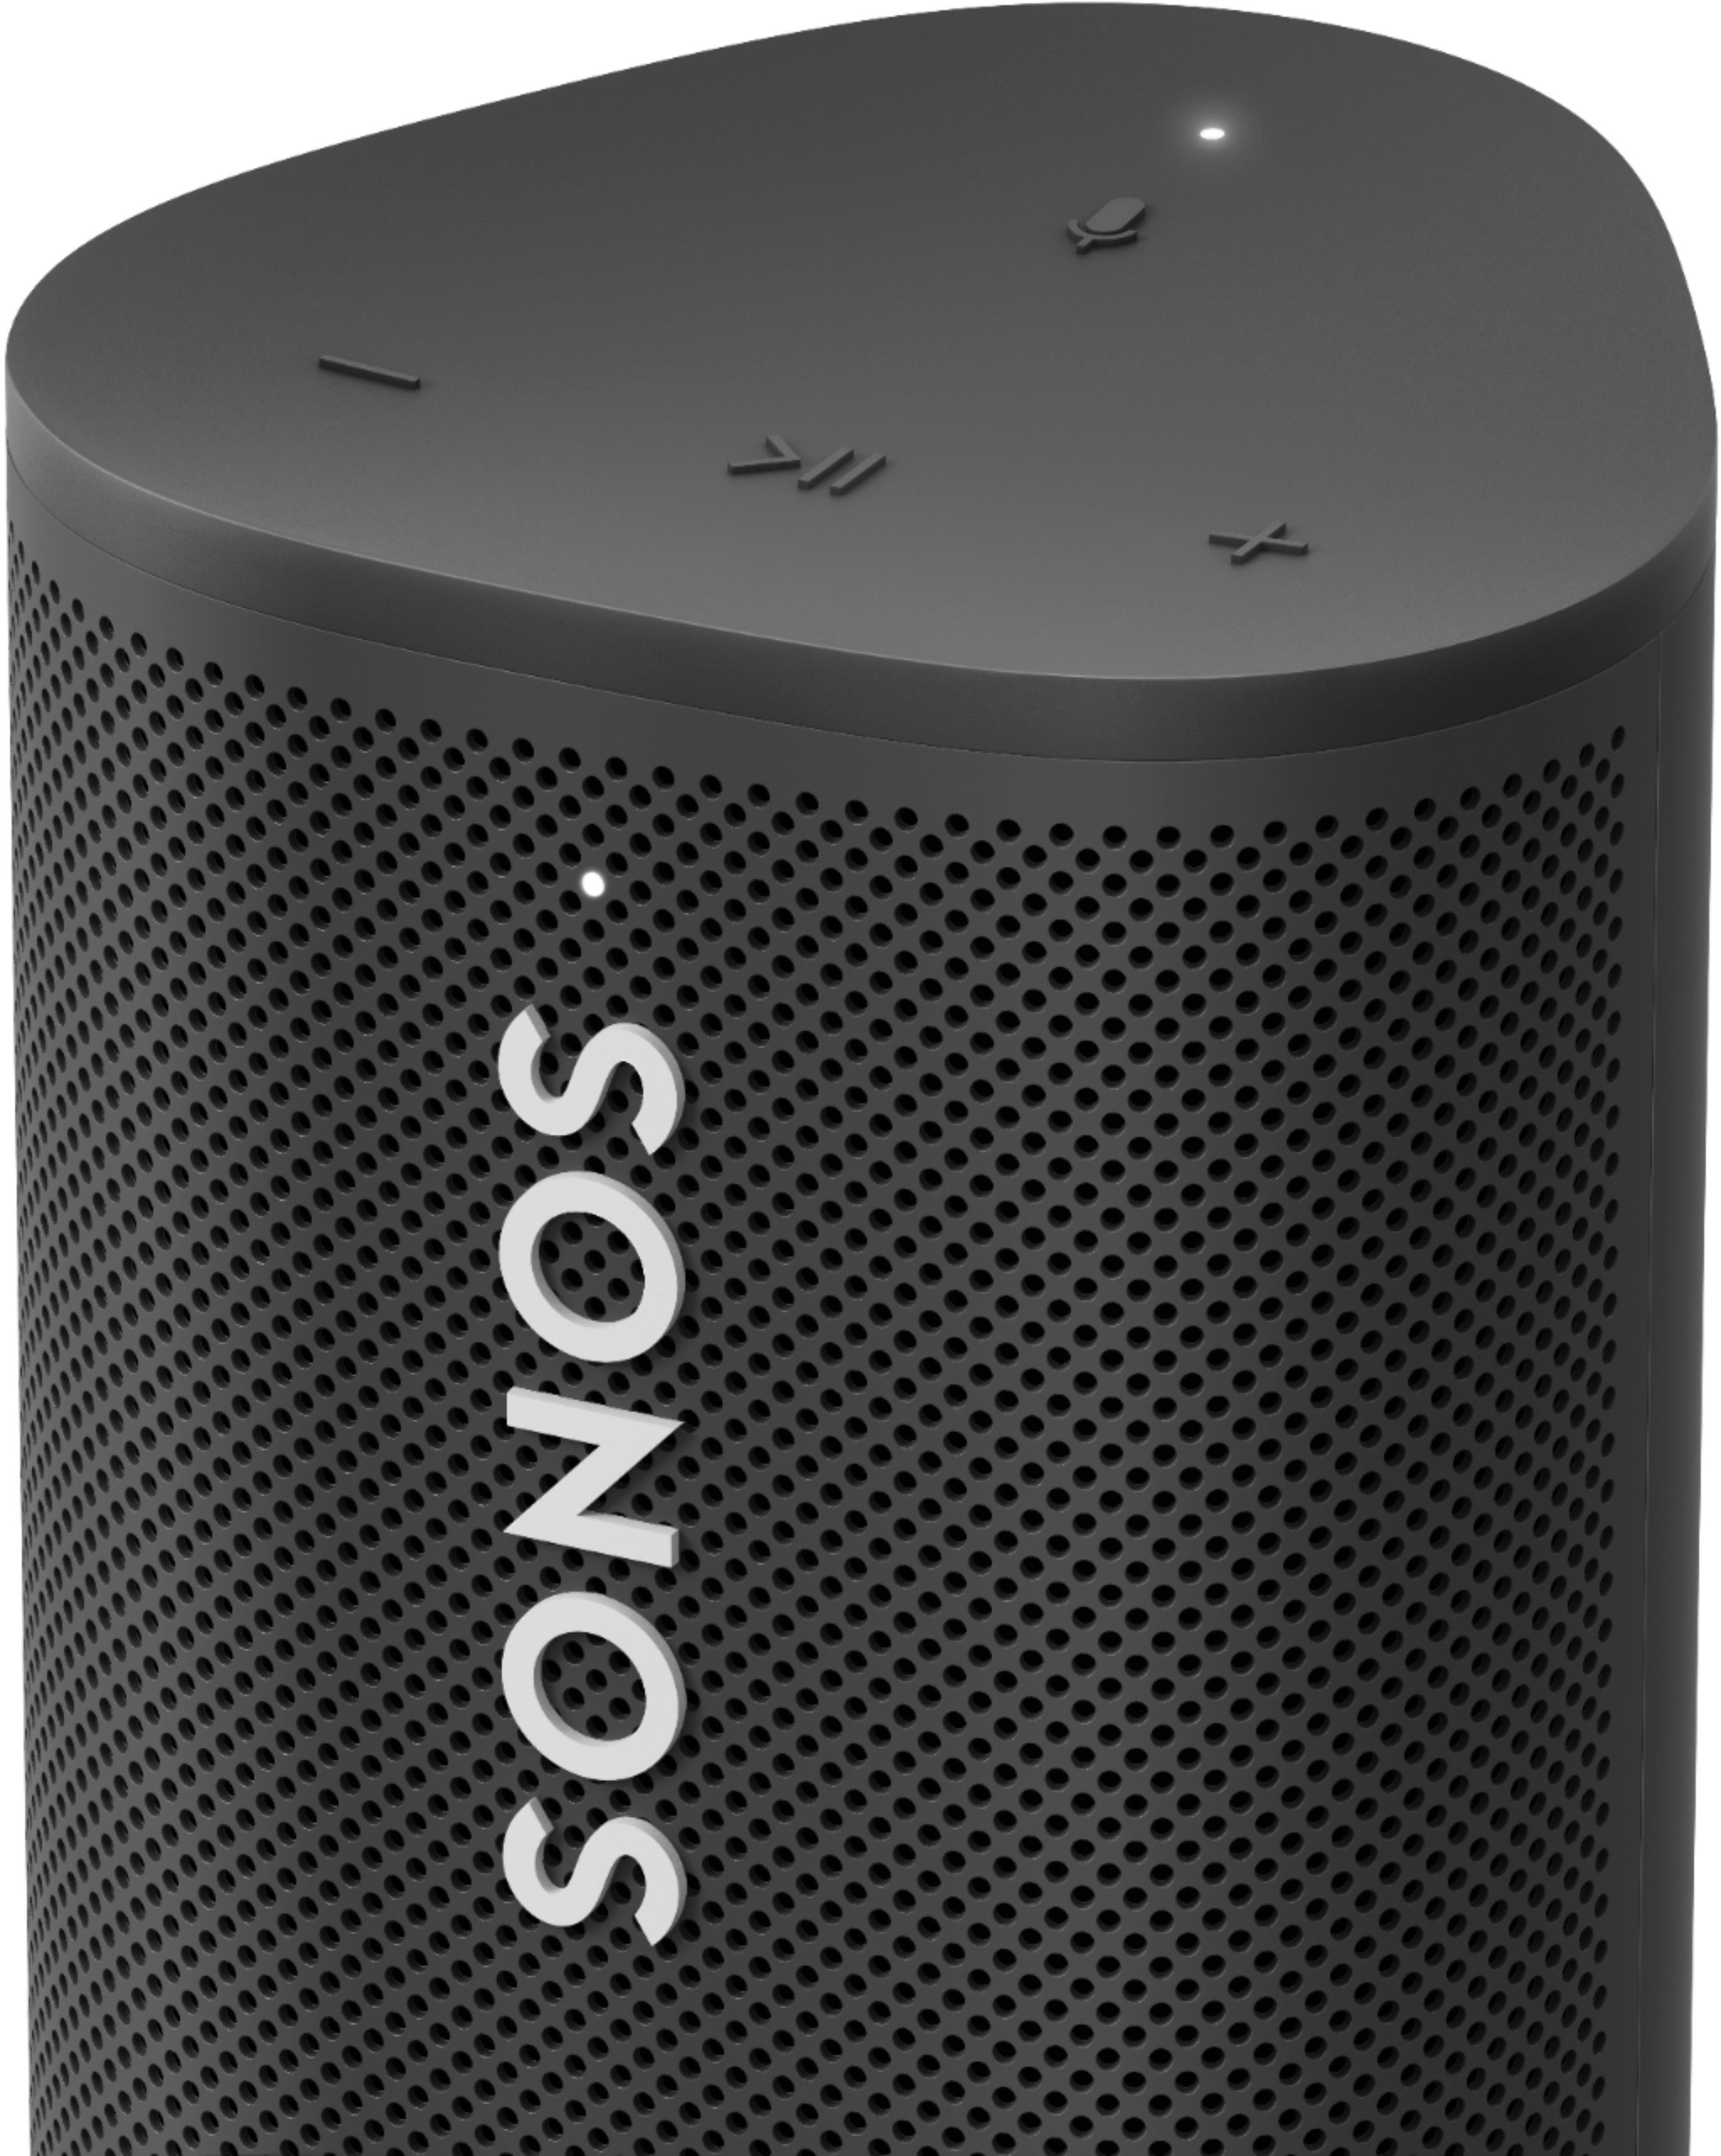 Sonos Roam Smart Portable WiFi and Bluetooth Speaker with Amazon Alexa